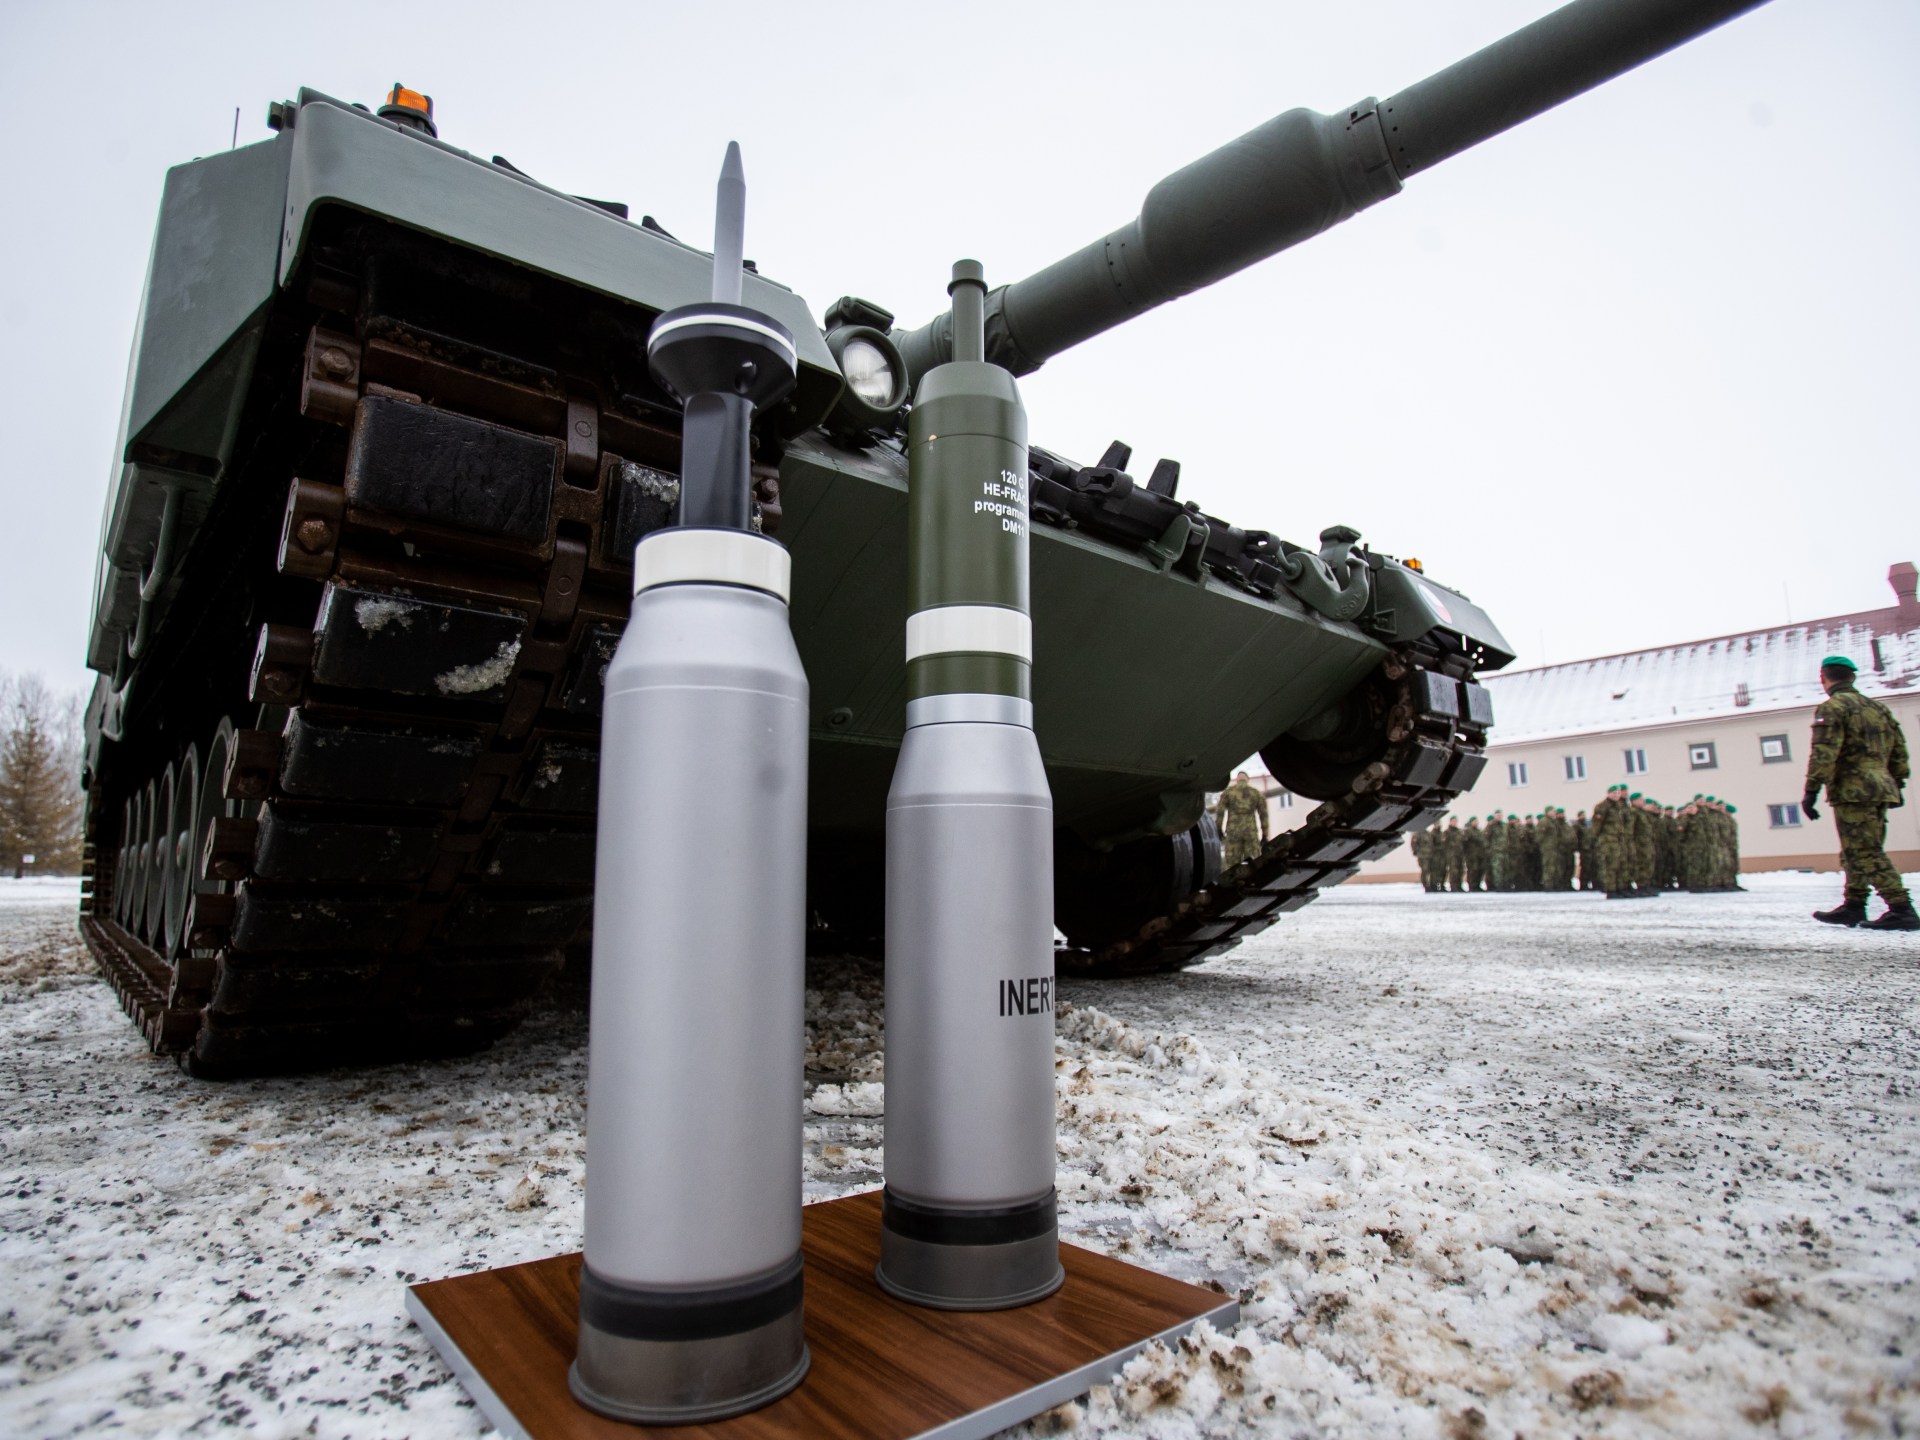 No Leopard tanks for Ukraine as NATO allies fail to agree